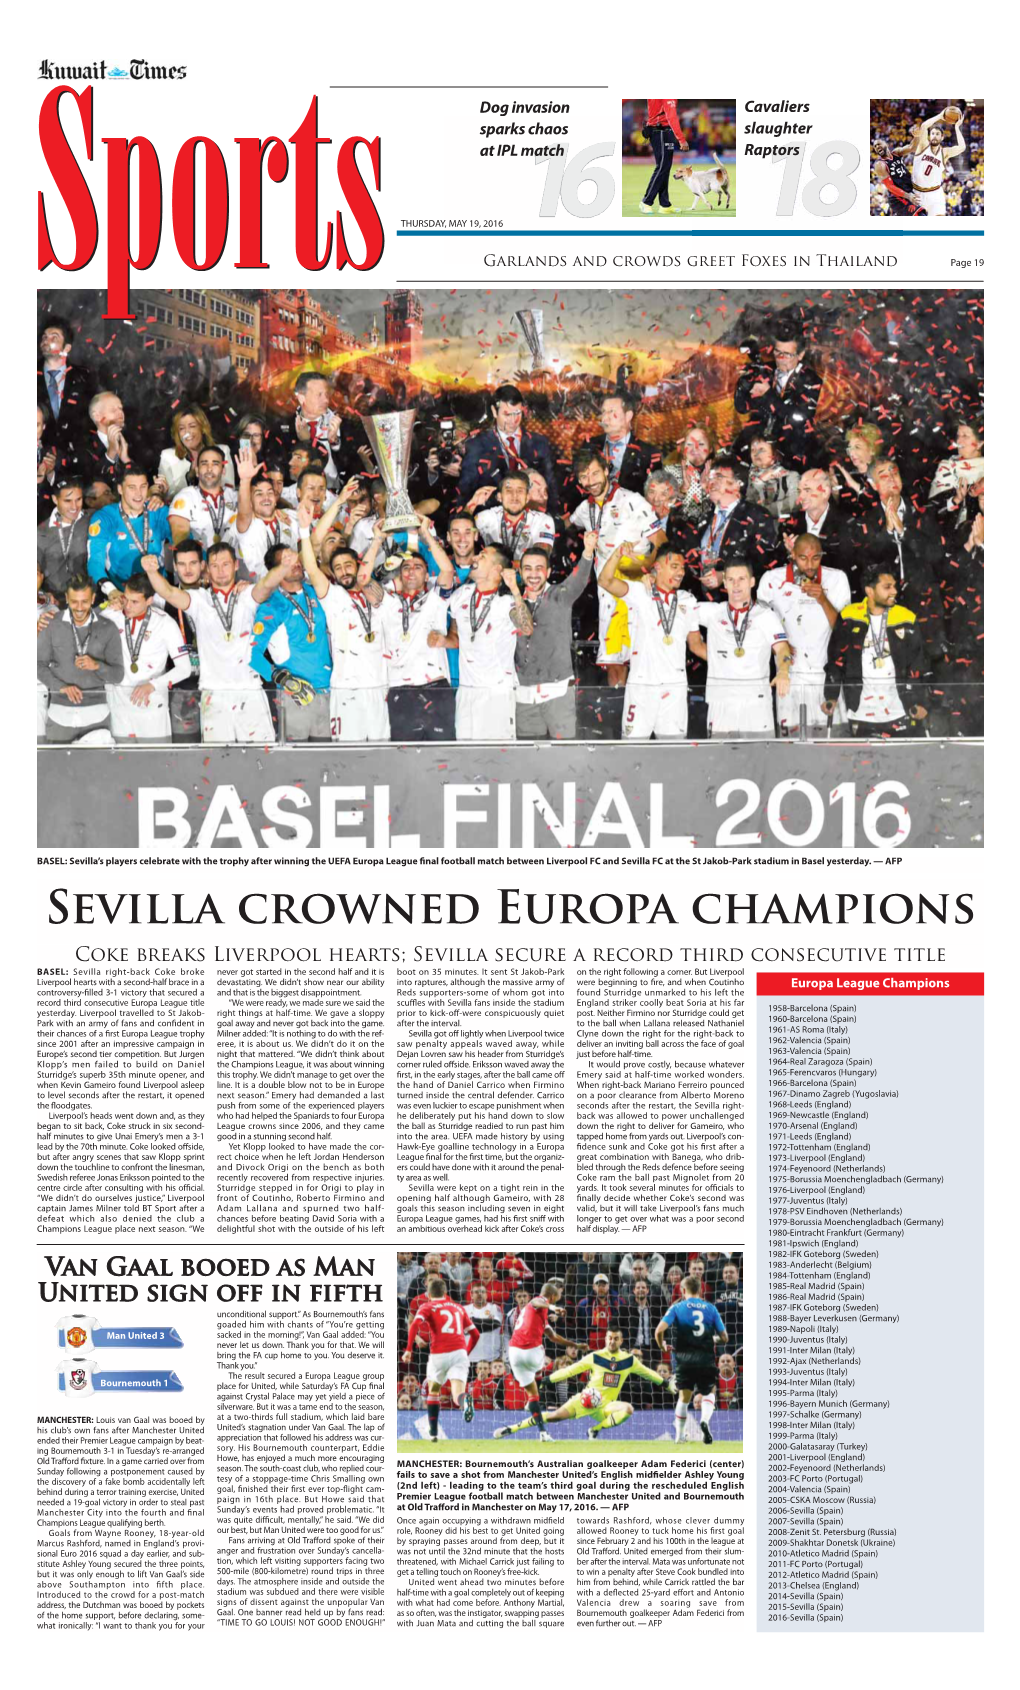 Sevilla Crowned Europa Champions